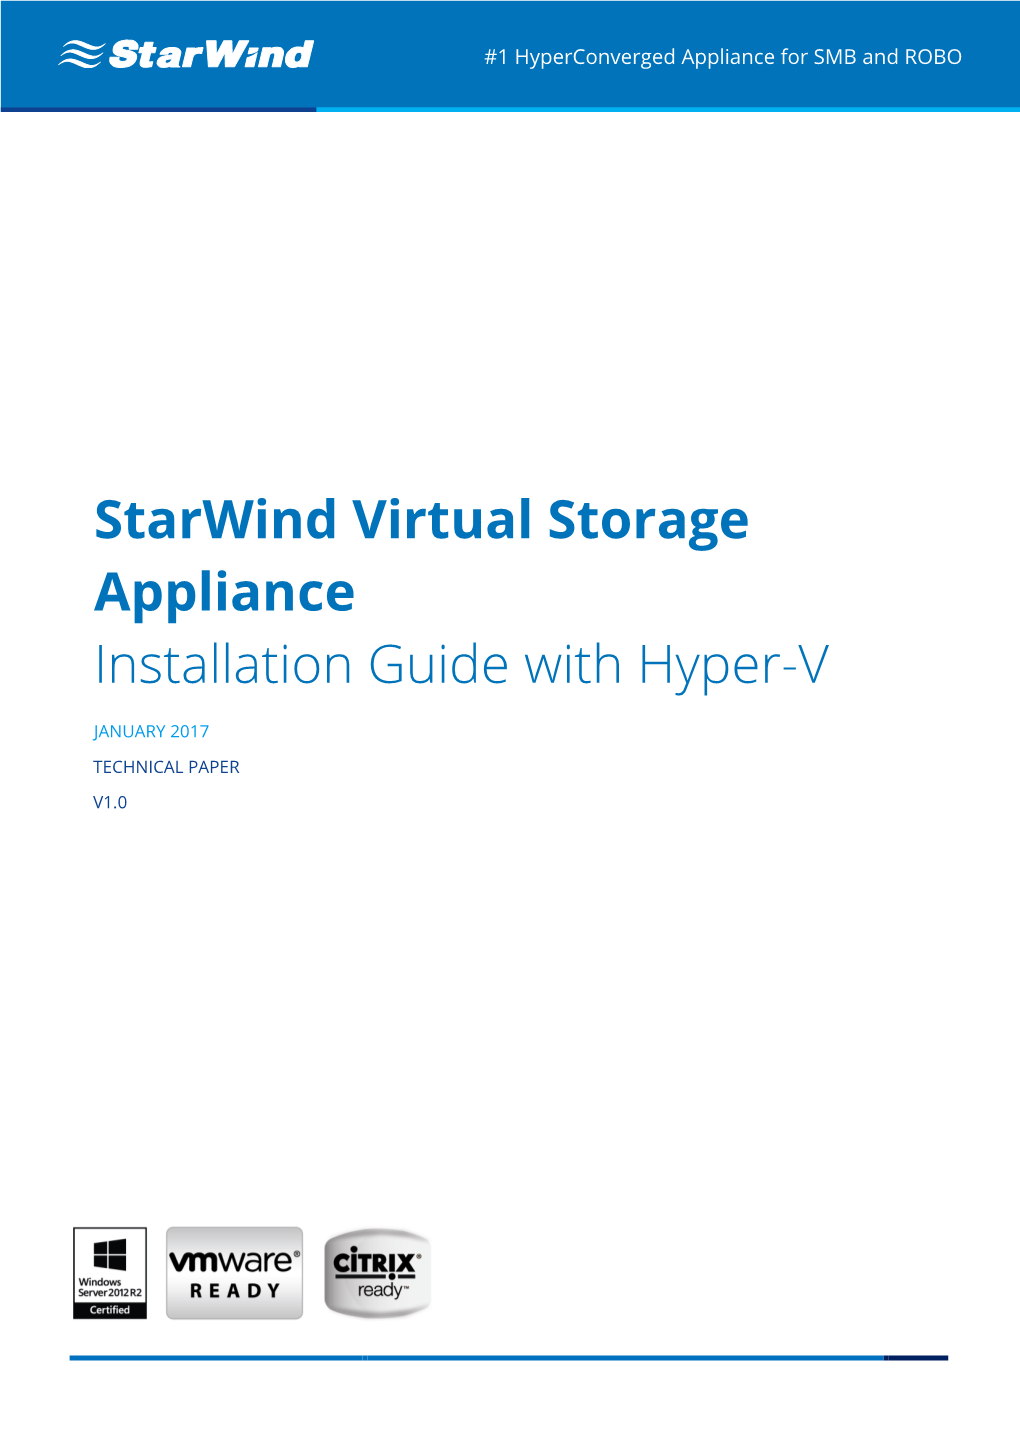 Starwind Virtual Storage Appliance Installation Guide with Hyper-V